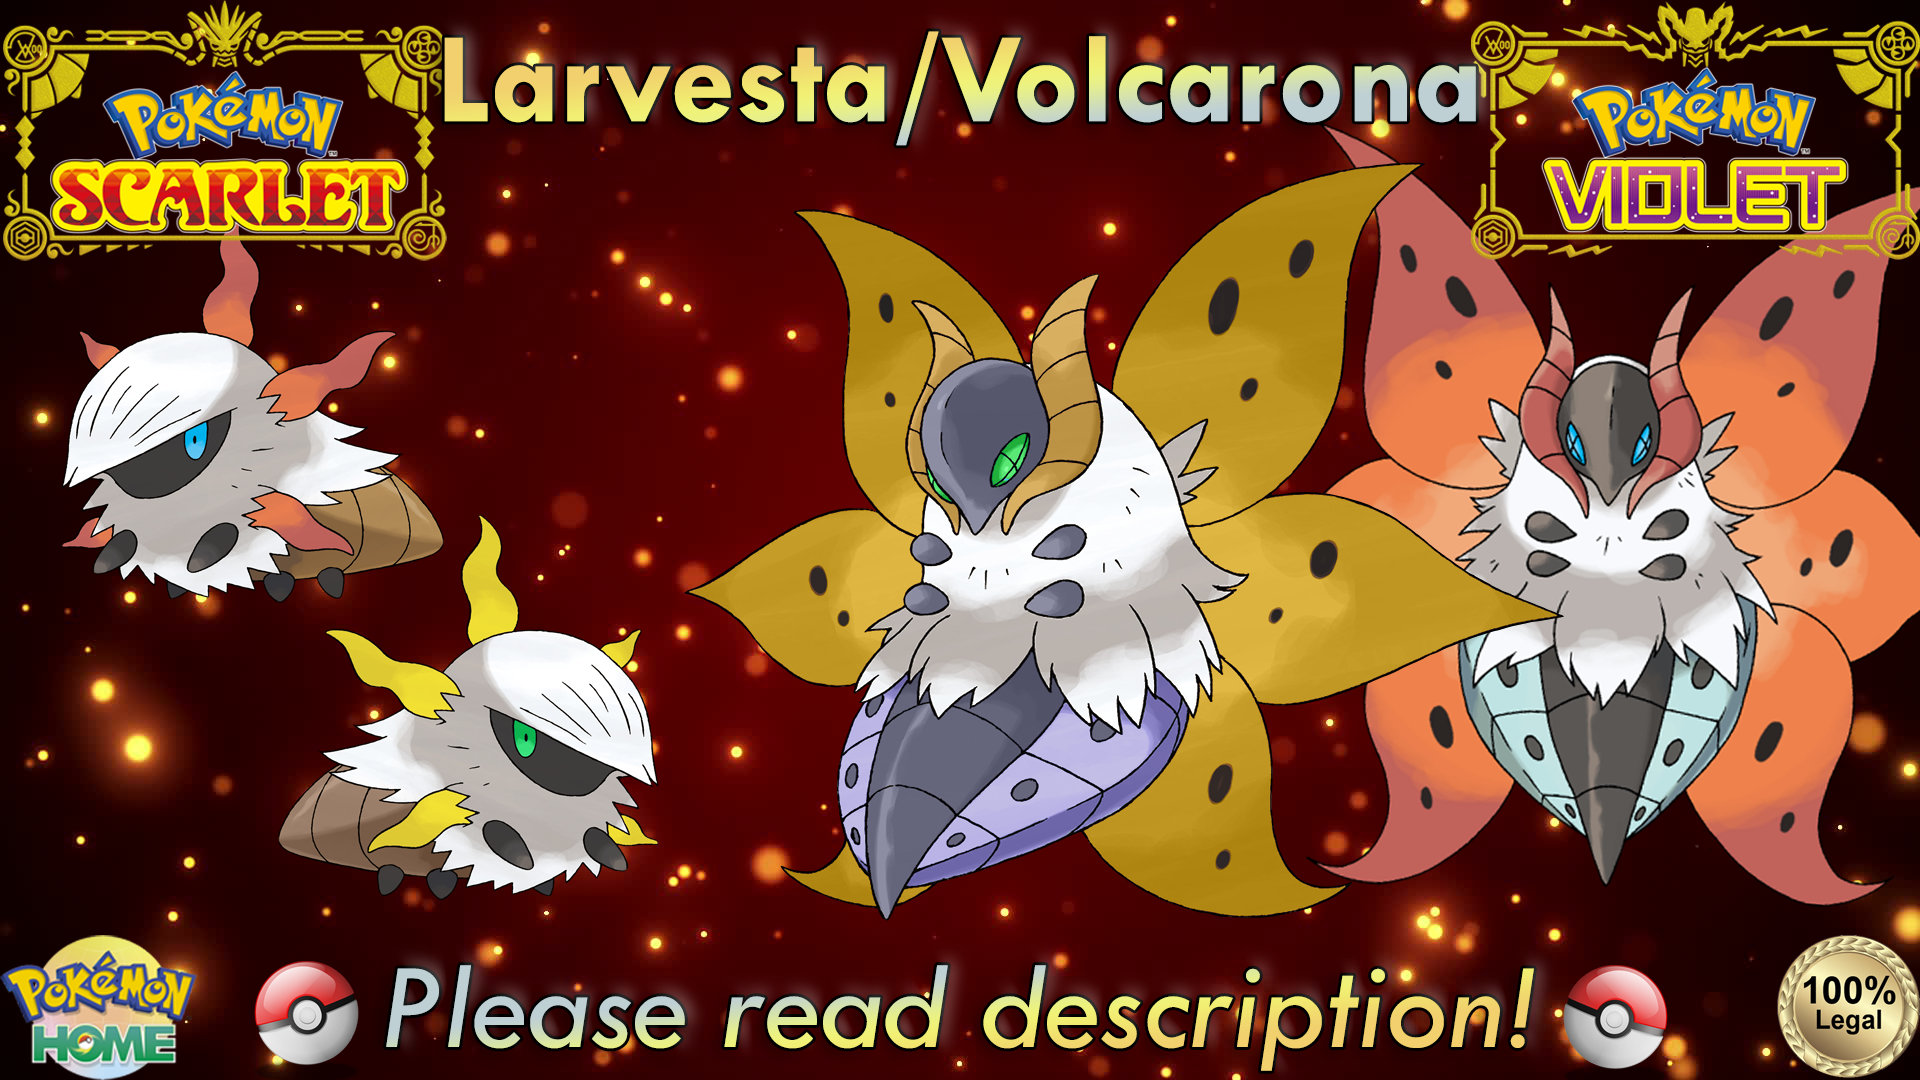 6IV Shiny Voltorb Hisui Pokemon Scarlet and Violet